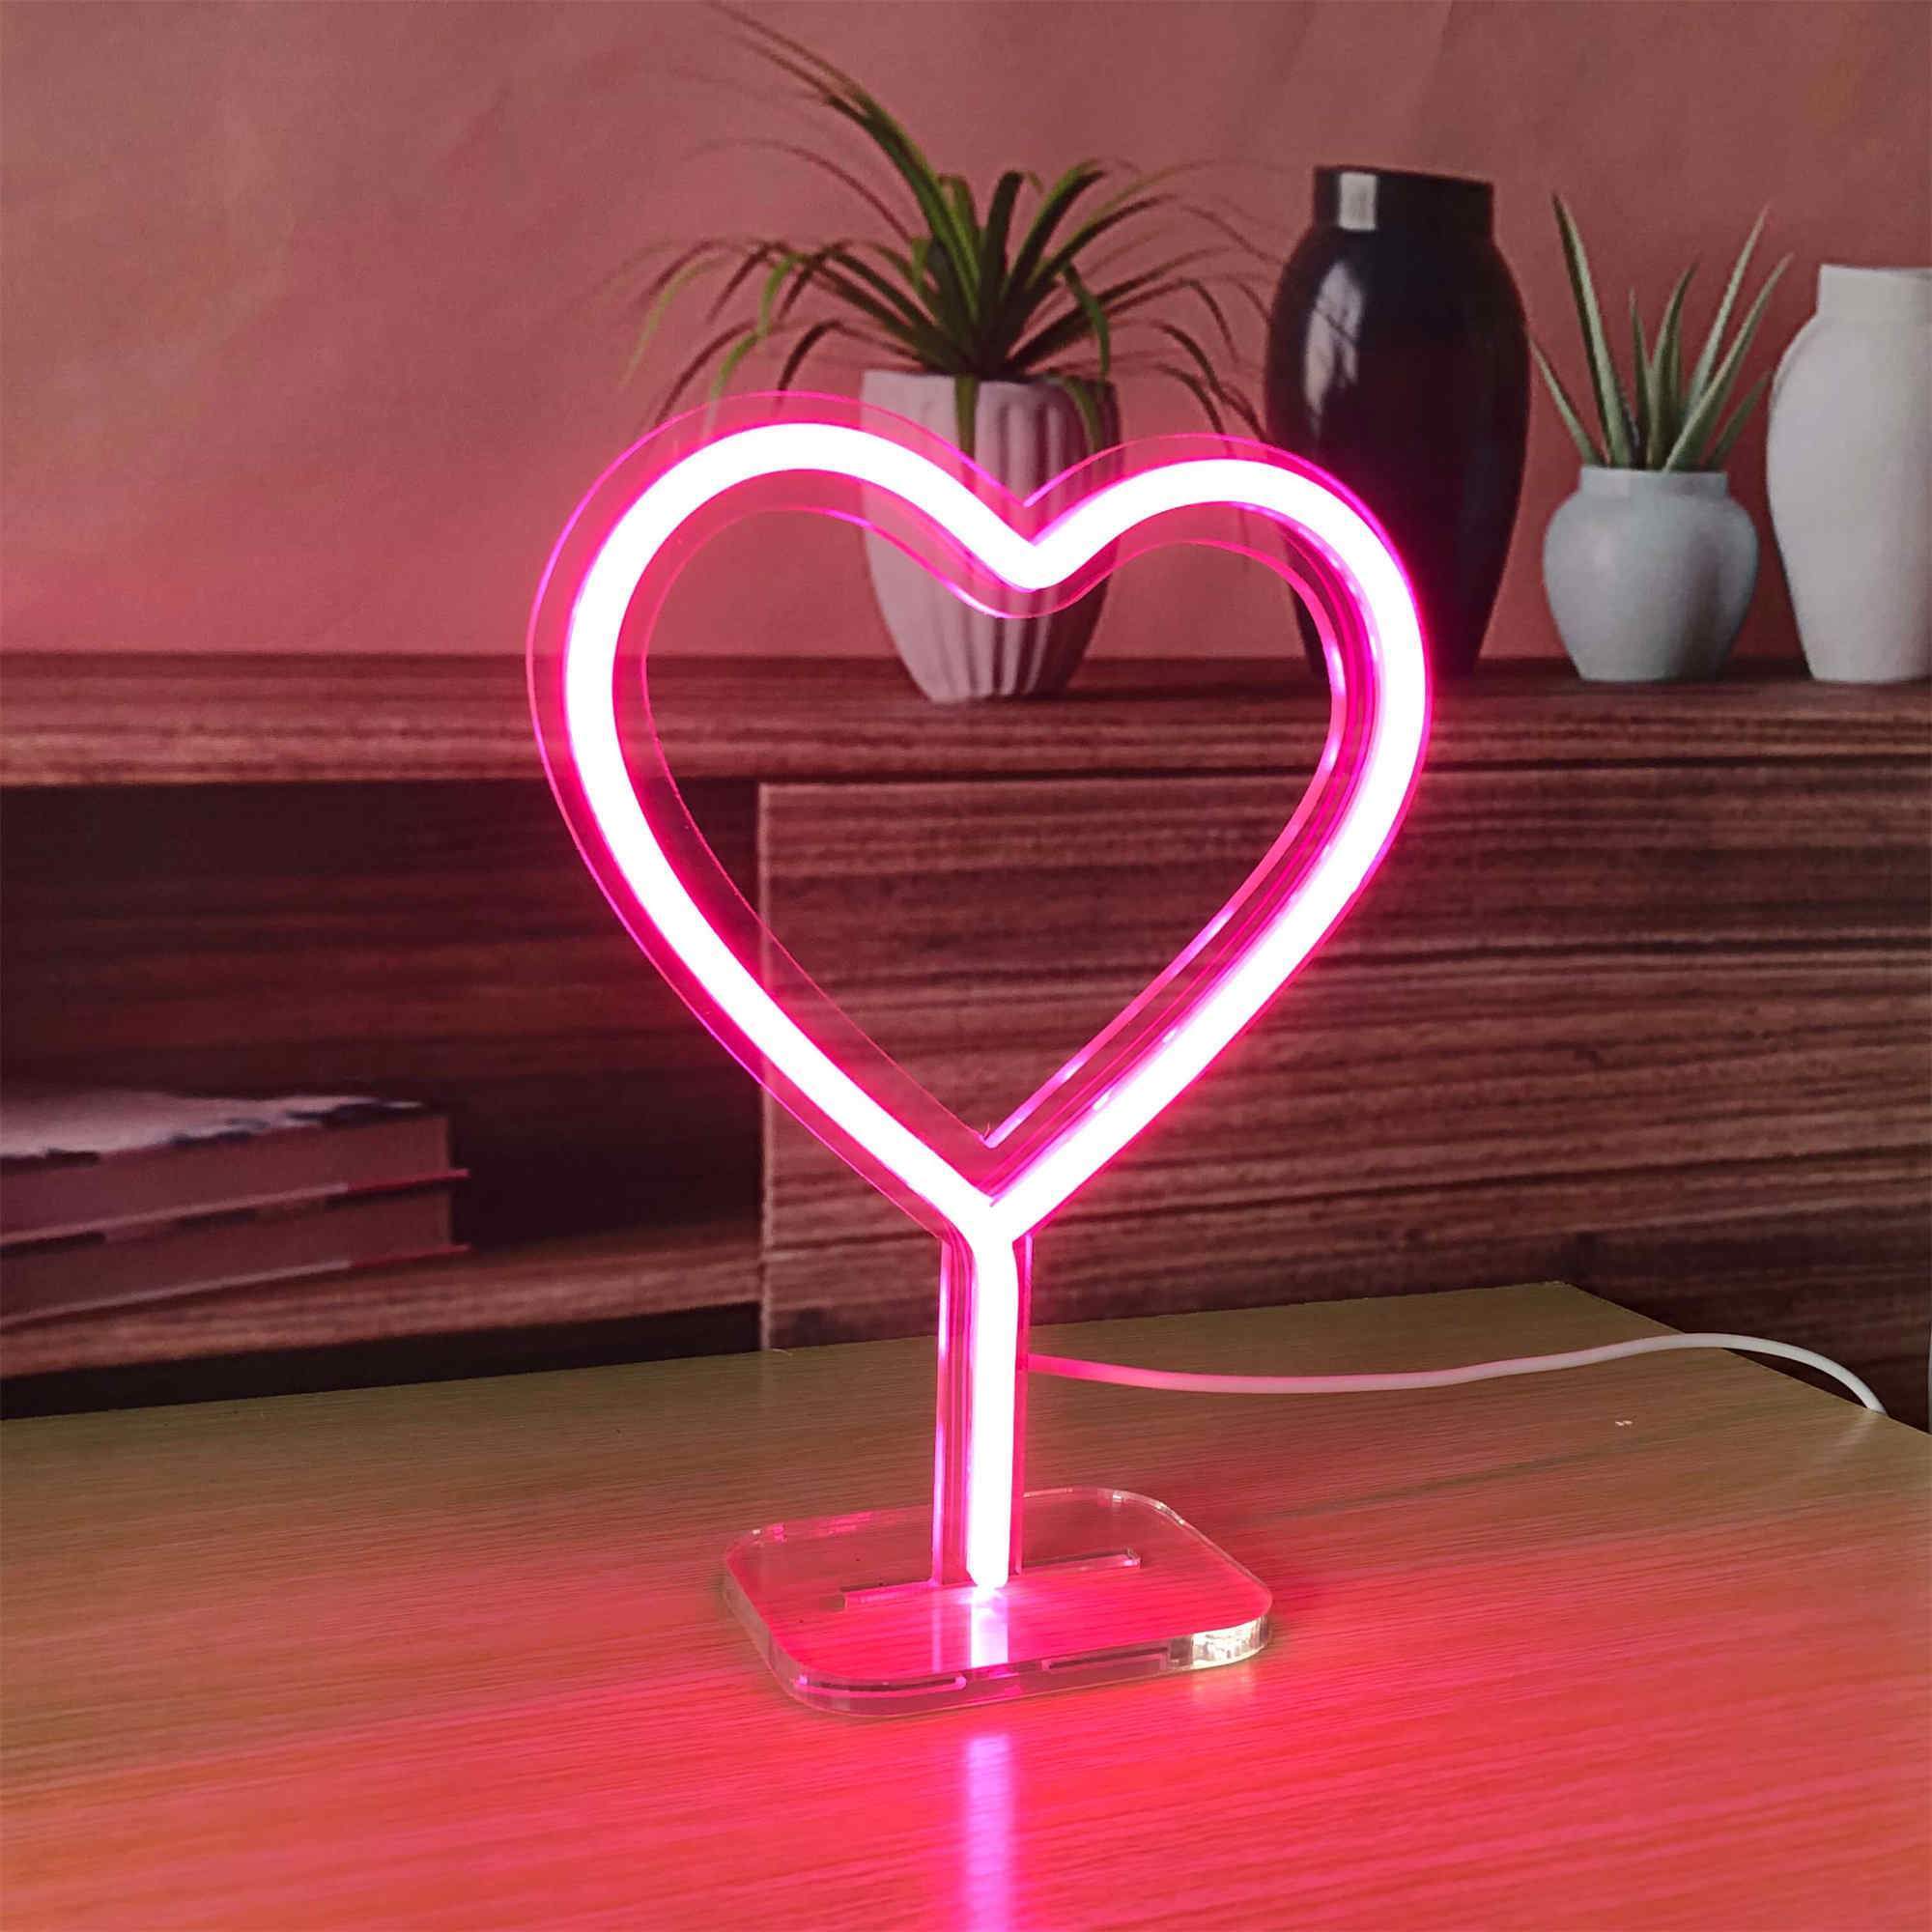 Heart LED Neon Sign lights